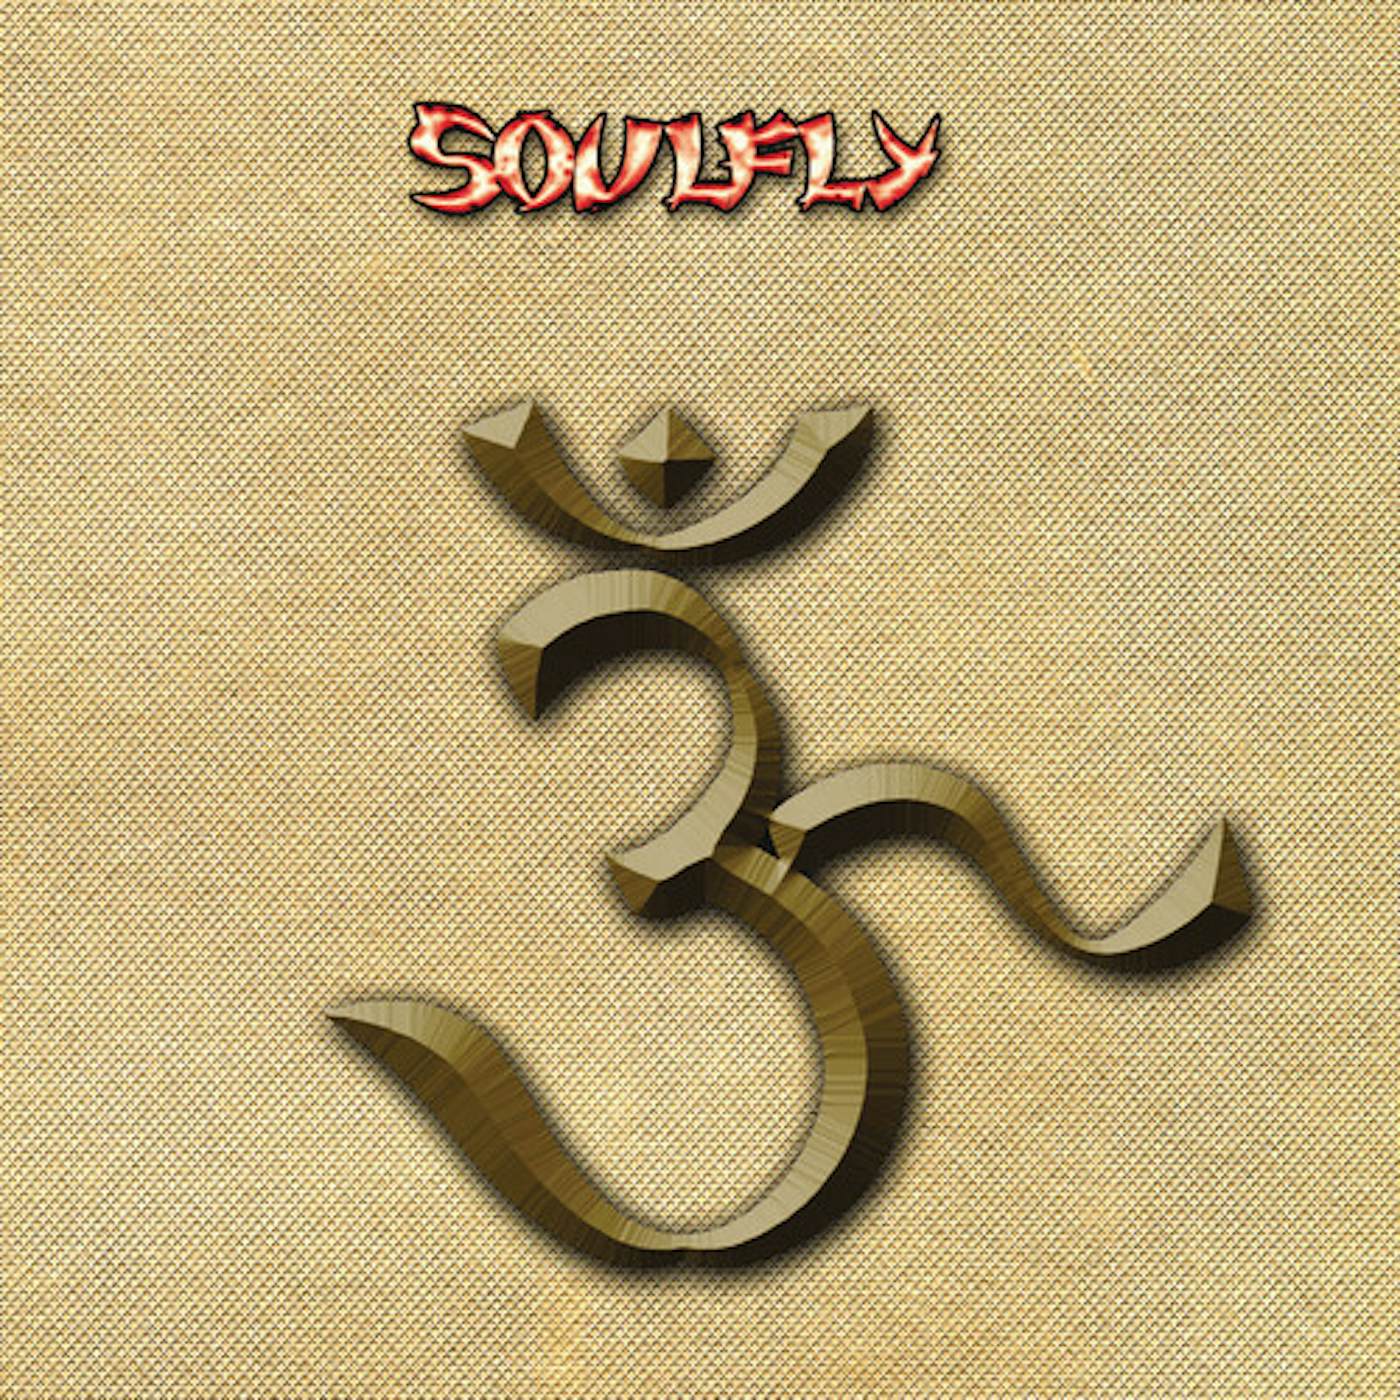 Soulfly 3 Vinyl Record